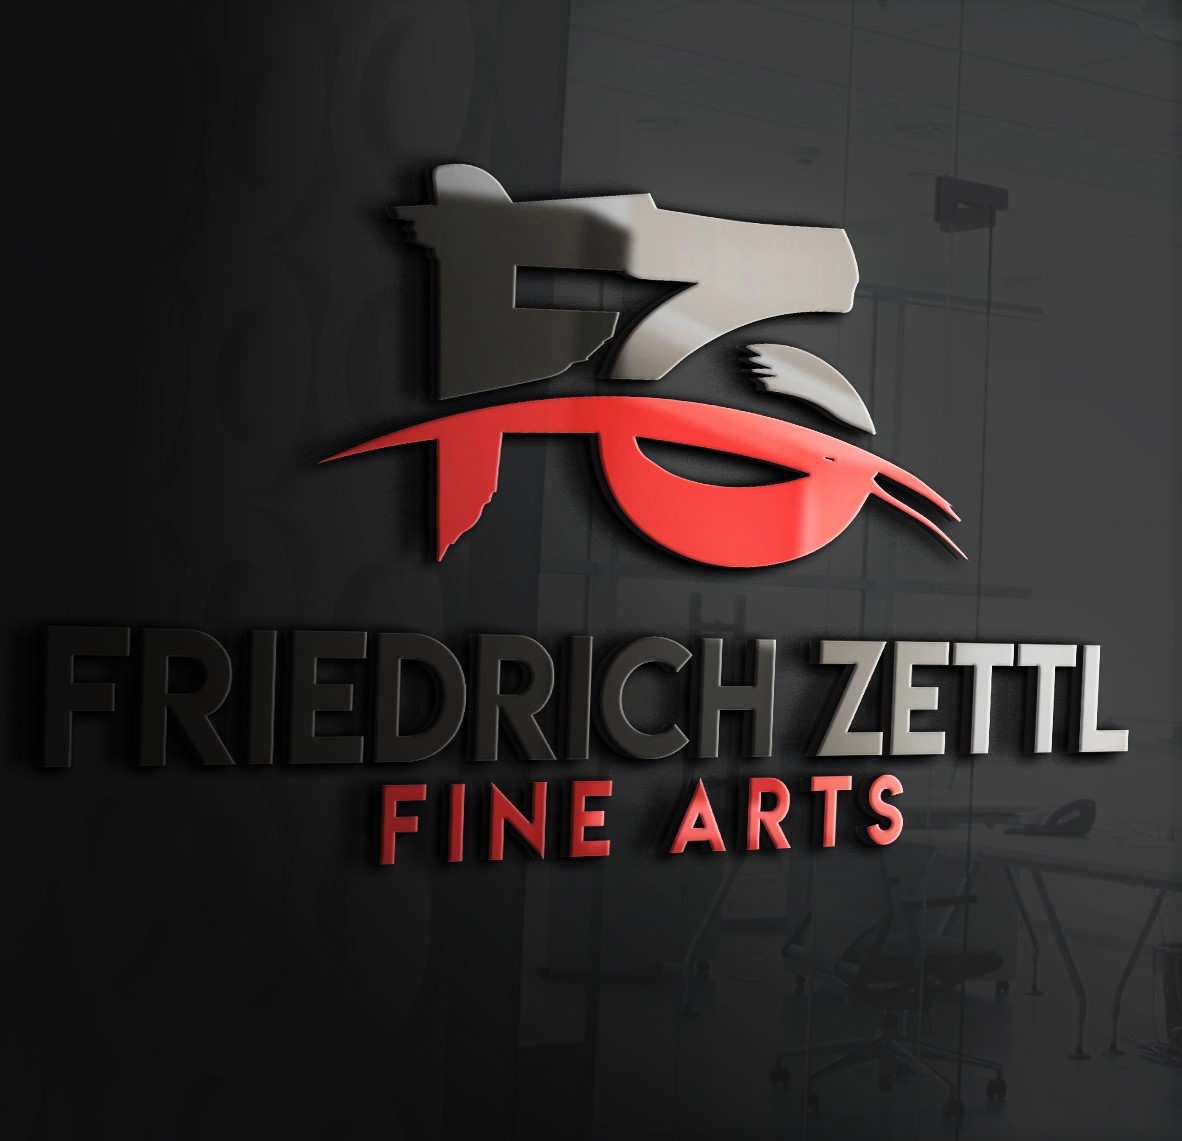 Friedrich Zettl